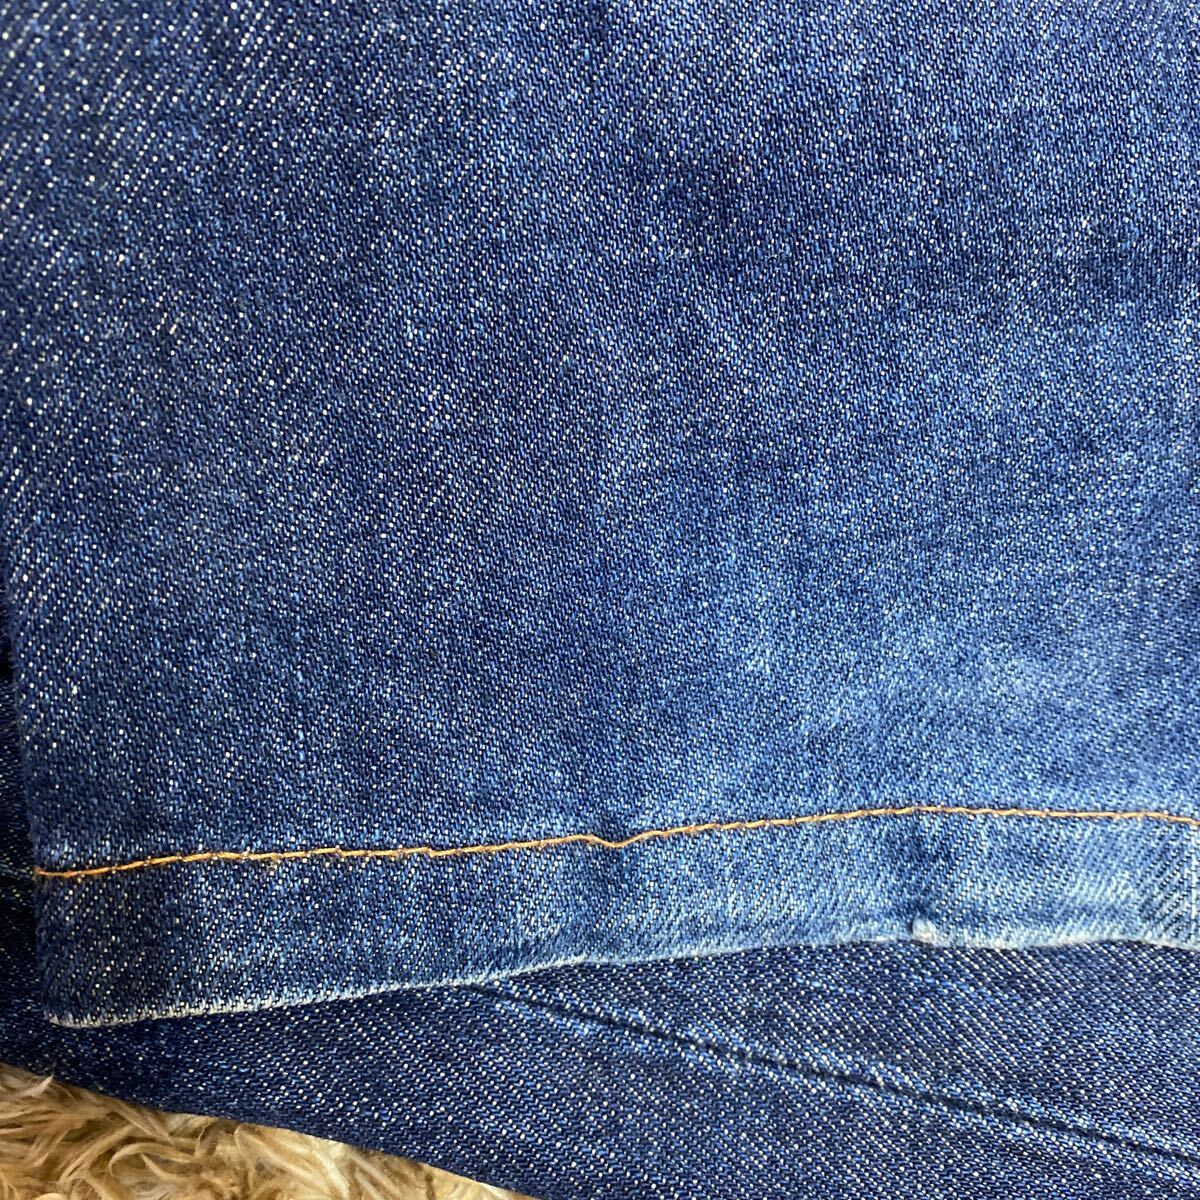 t63 Levi's 503 джинсы    размер  W29L36 обозначение 